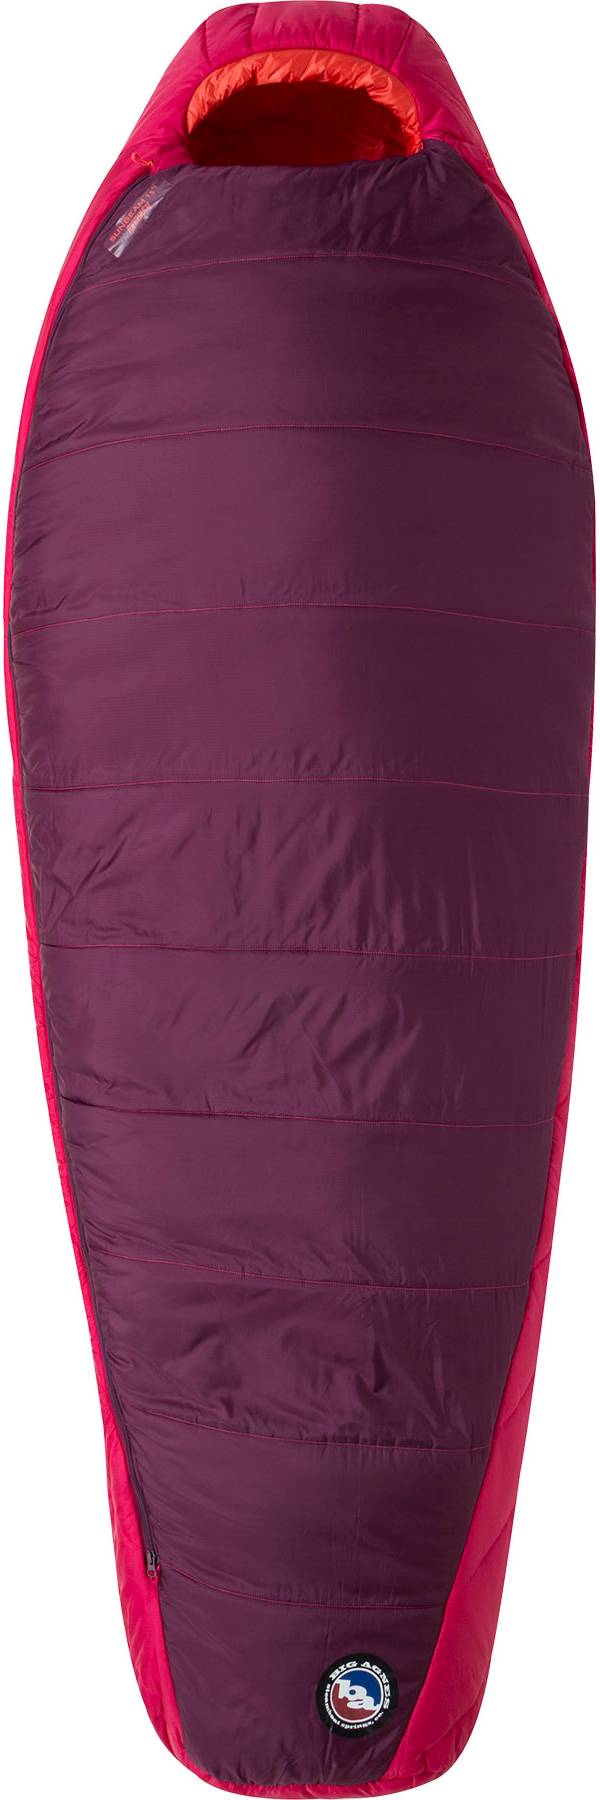 Big Agnes Sunbeam 15° Sleeping Bag product image